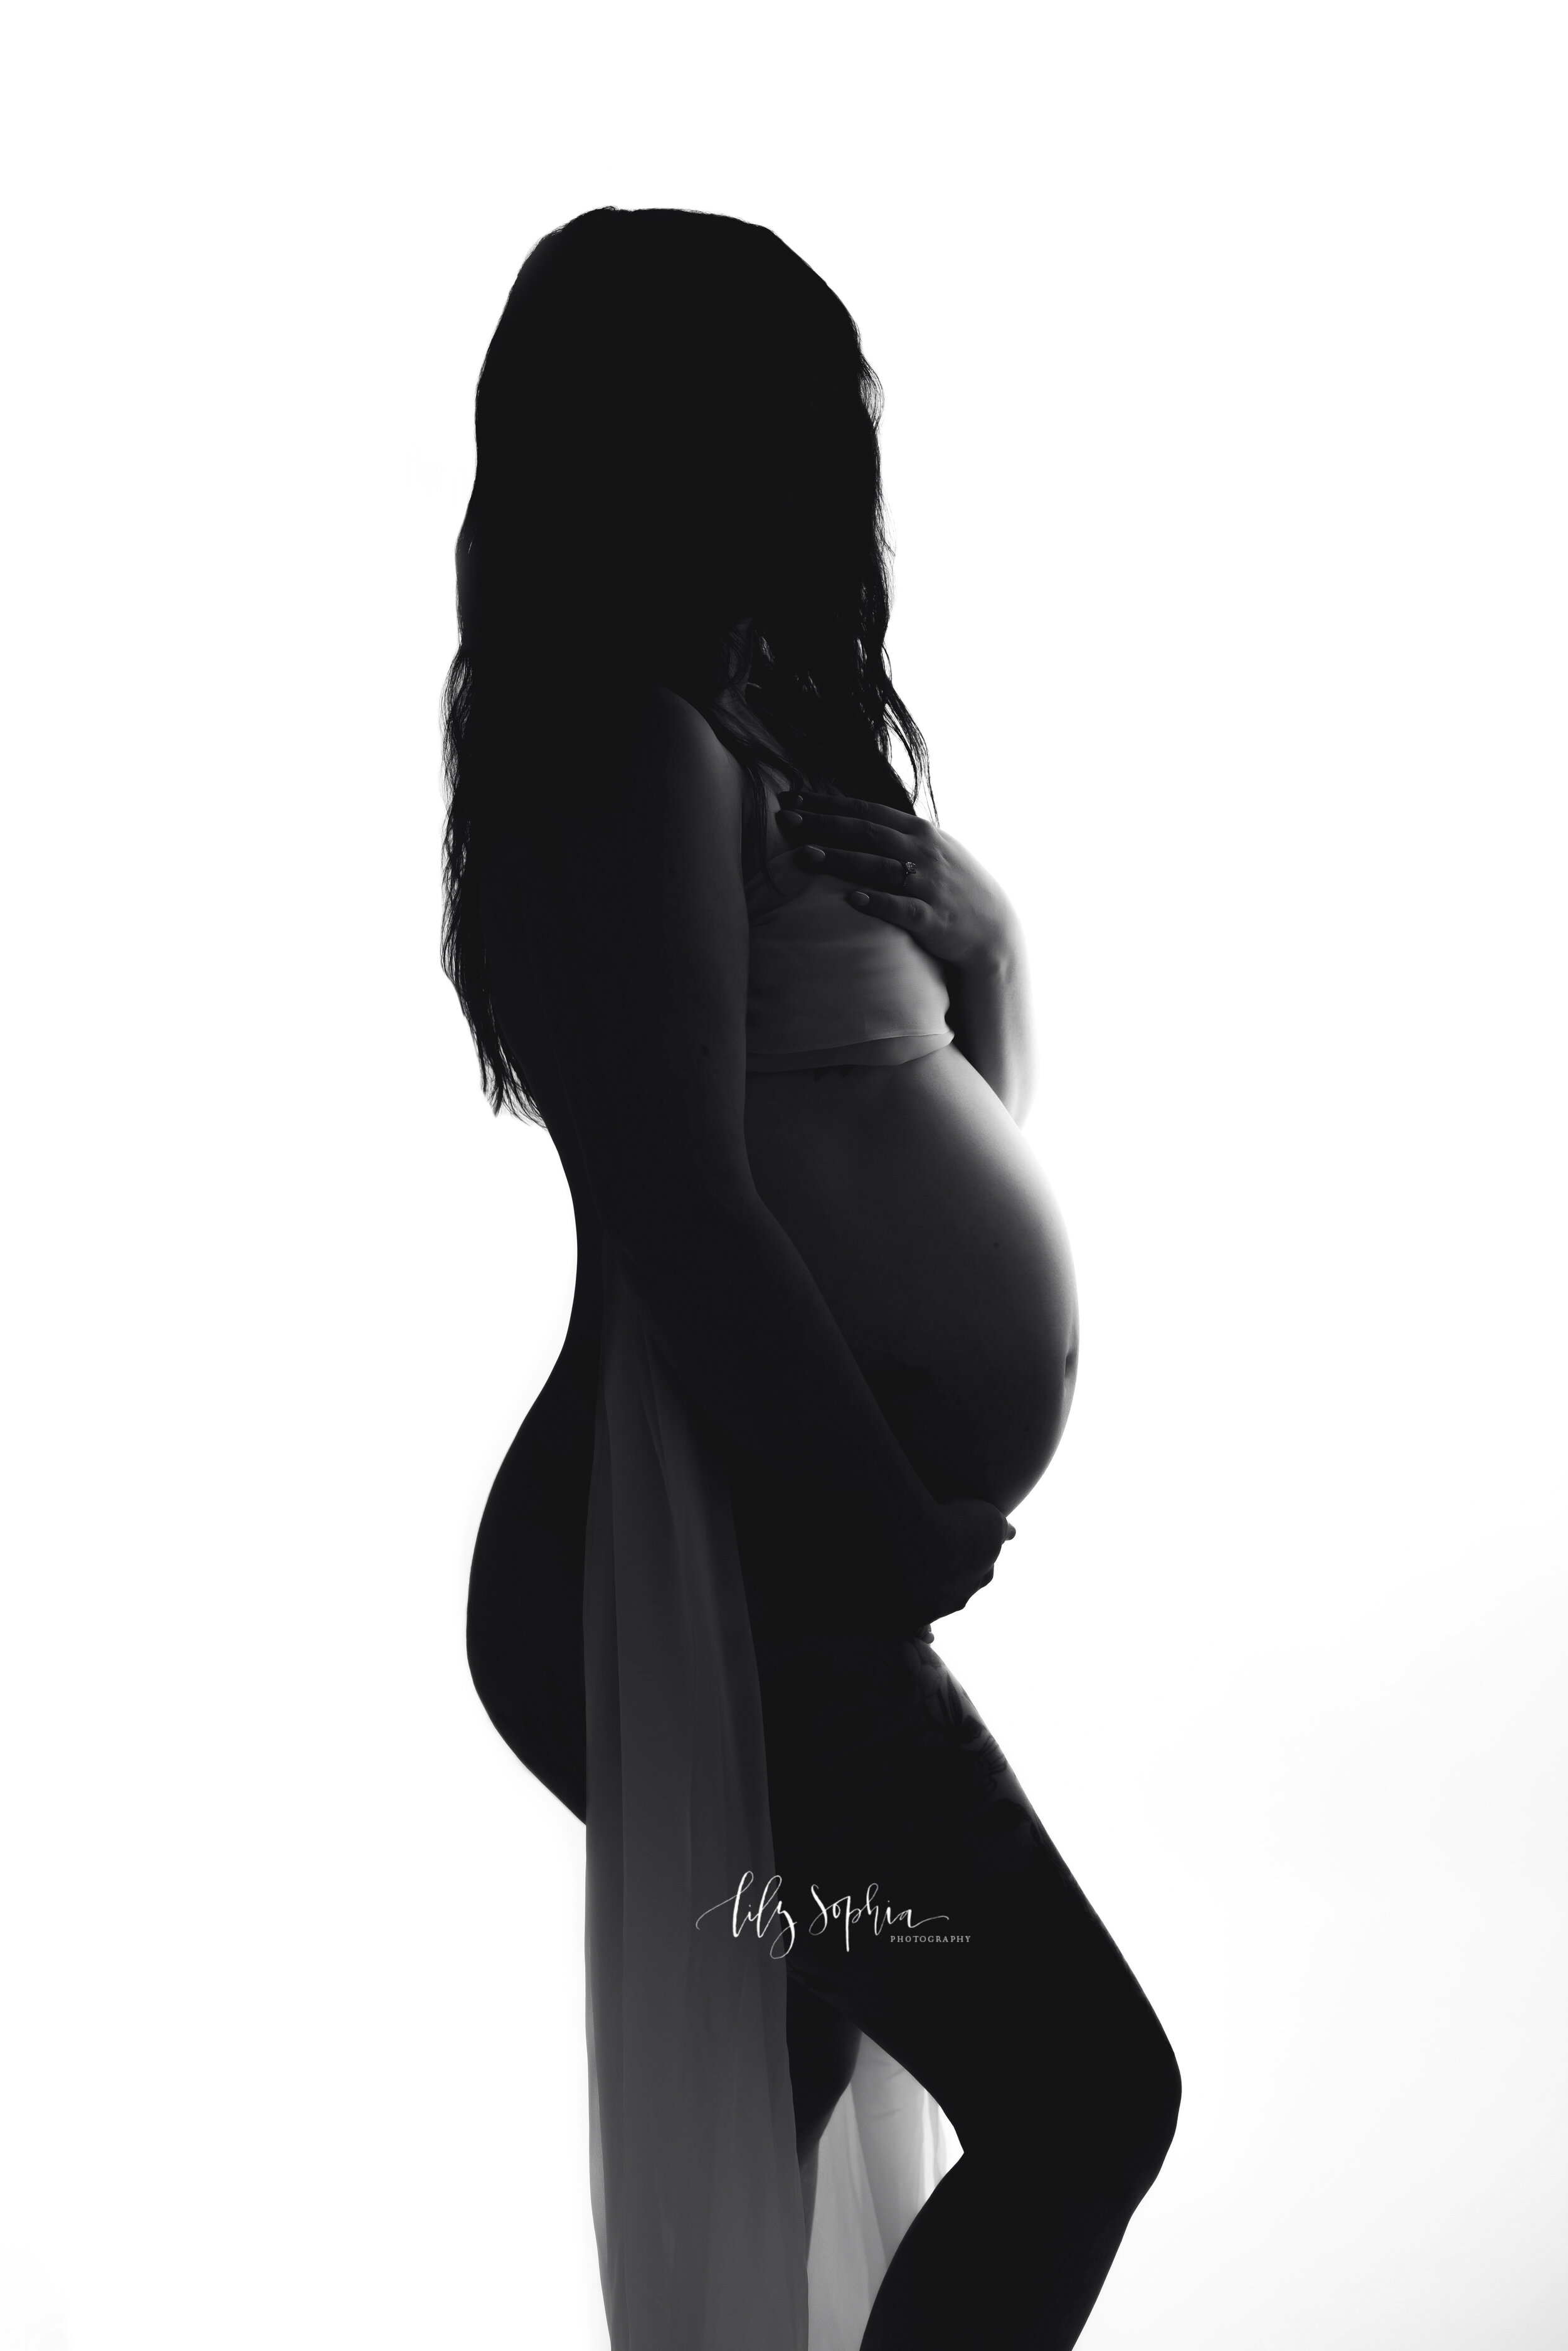 atlanta-fine-art-nude-maternity-portraits-pics.jpg